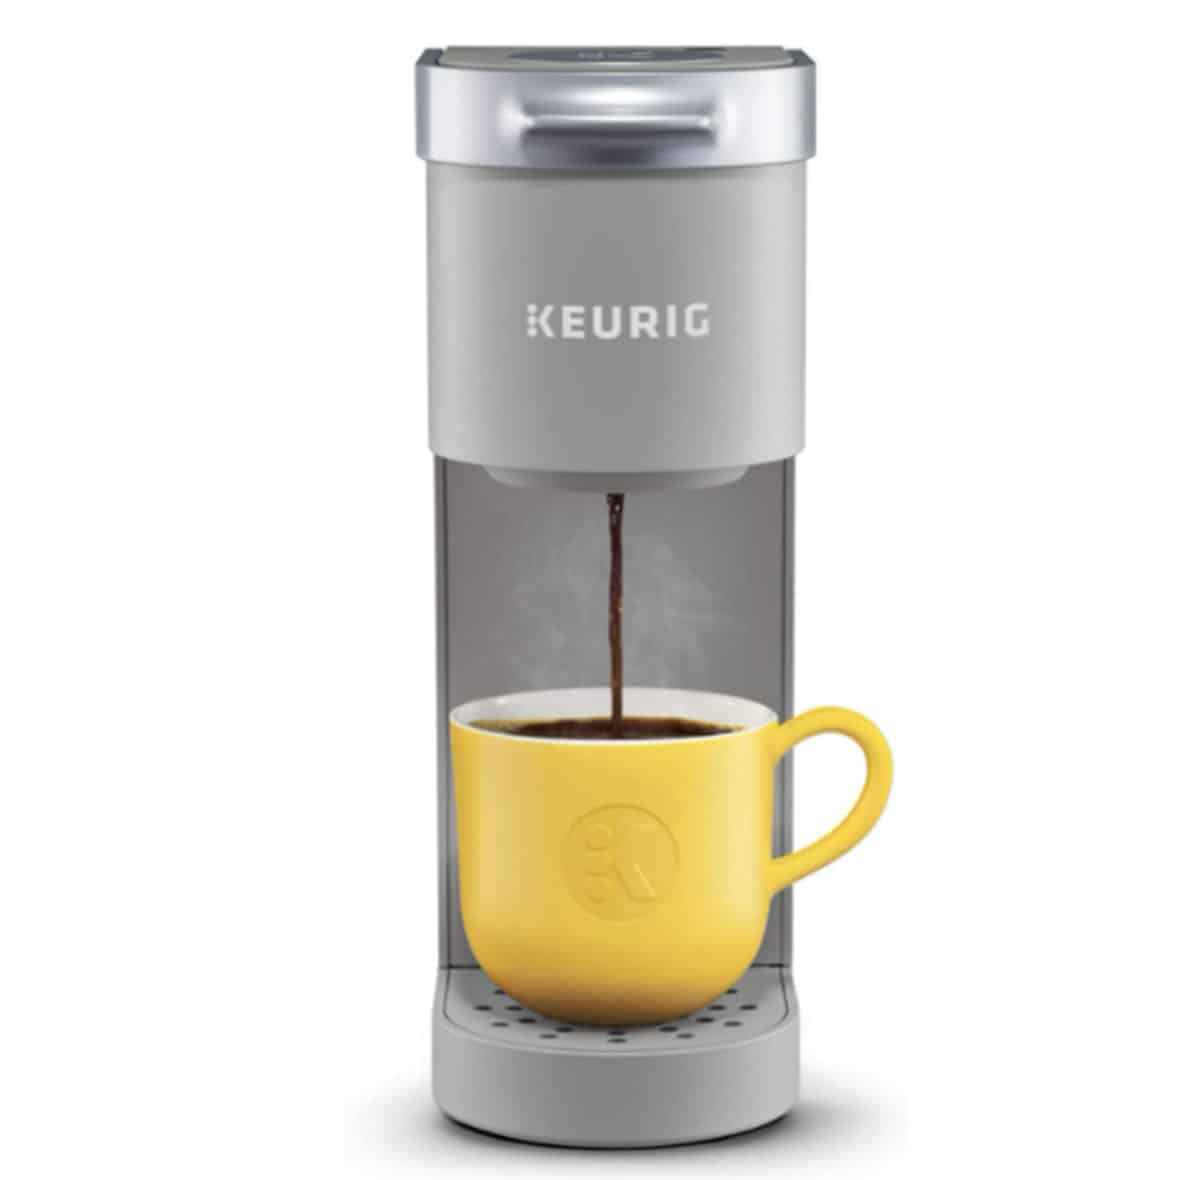 Gray Keurig single serve coffee maker with yellow coffee mug.